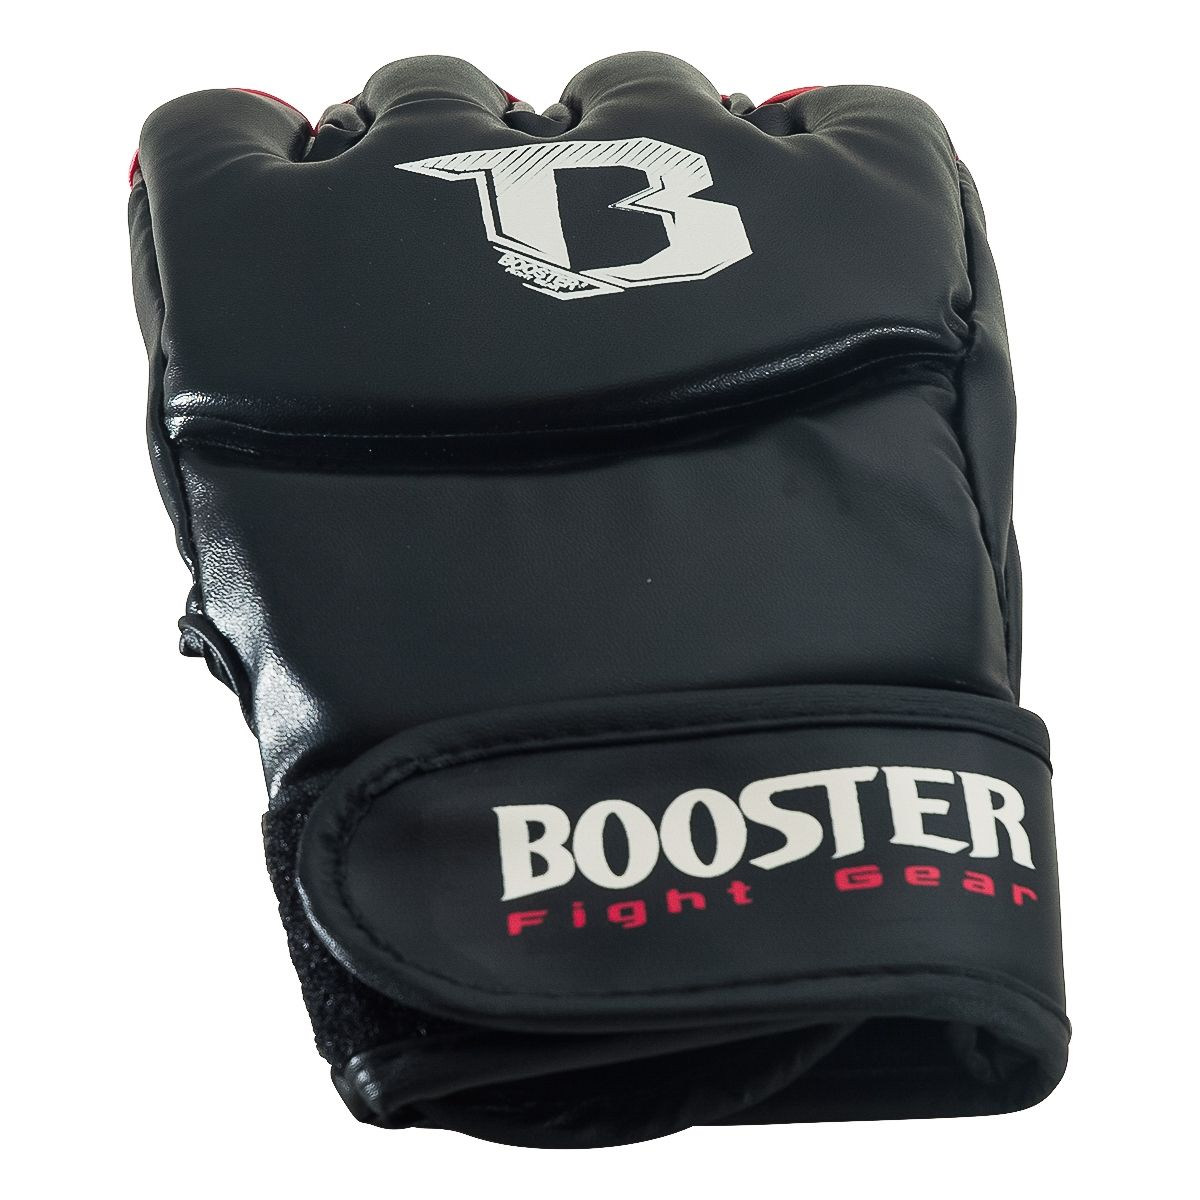 Booster MMA Handschuhe - BFF 9